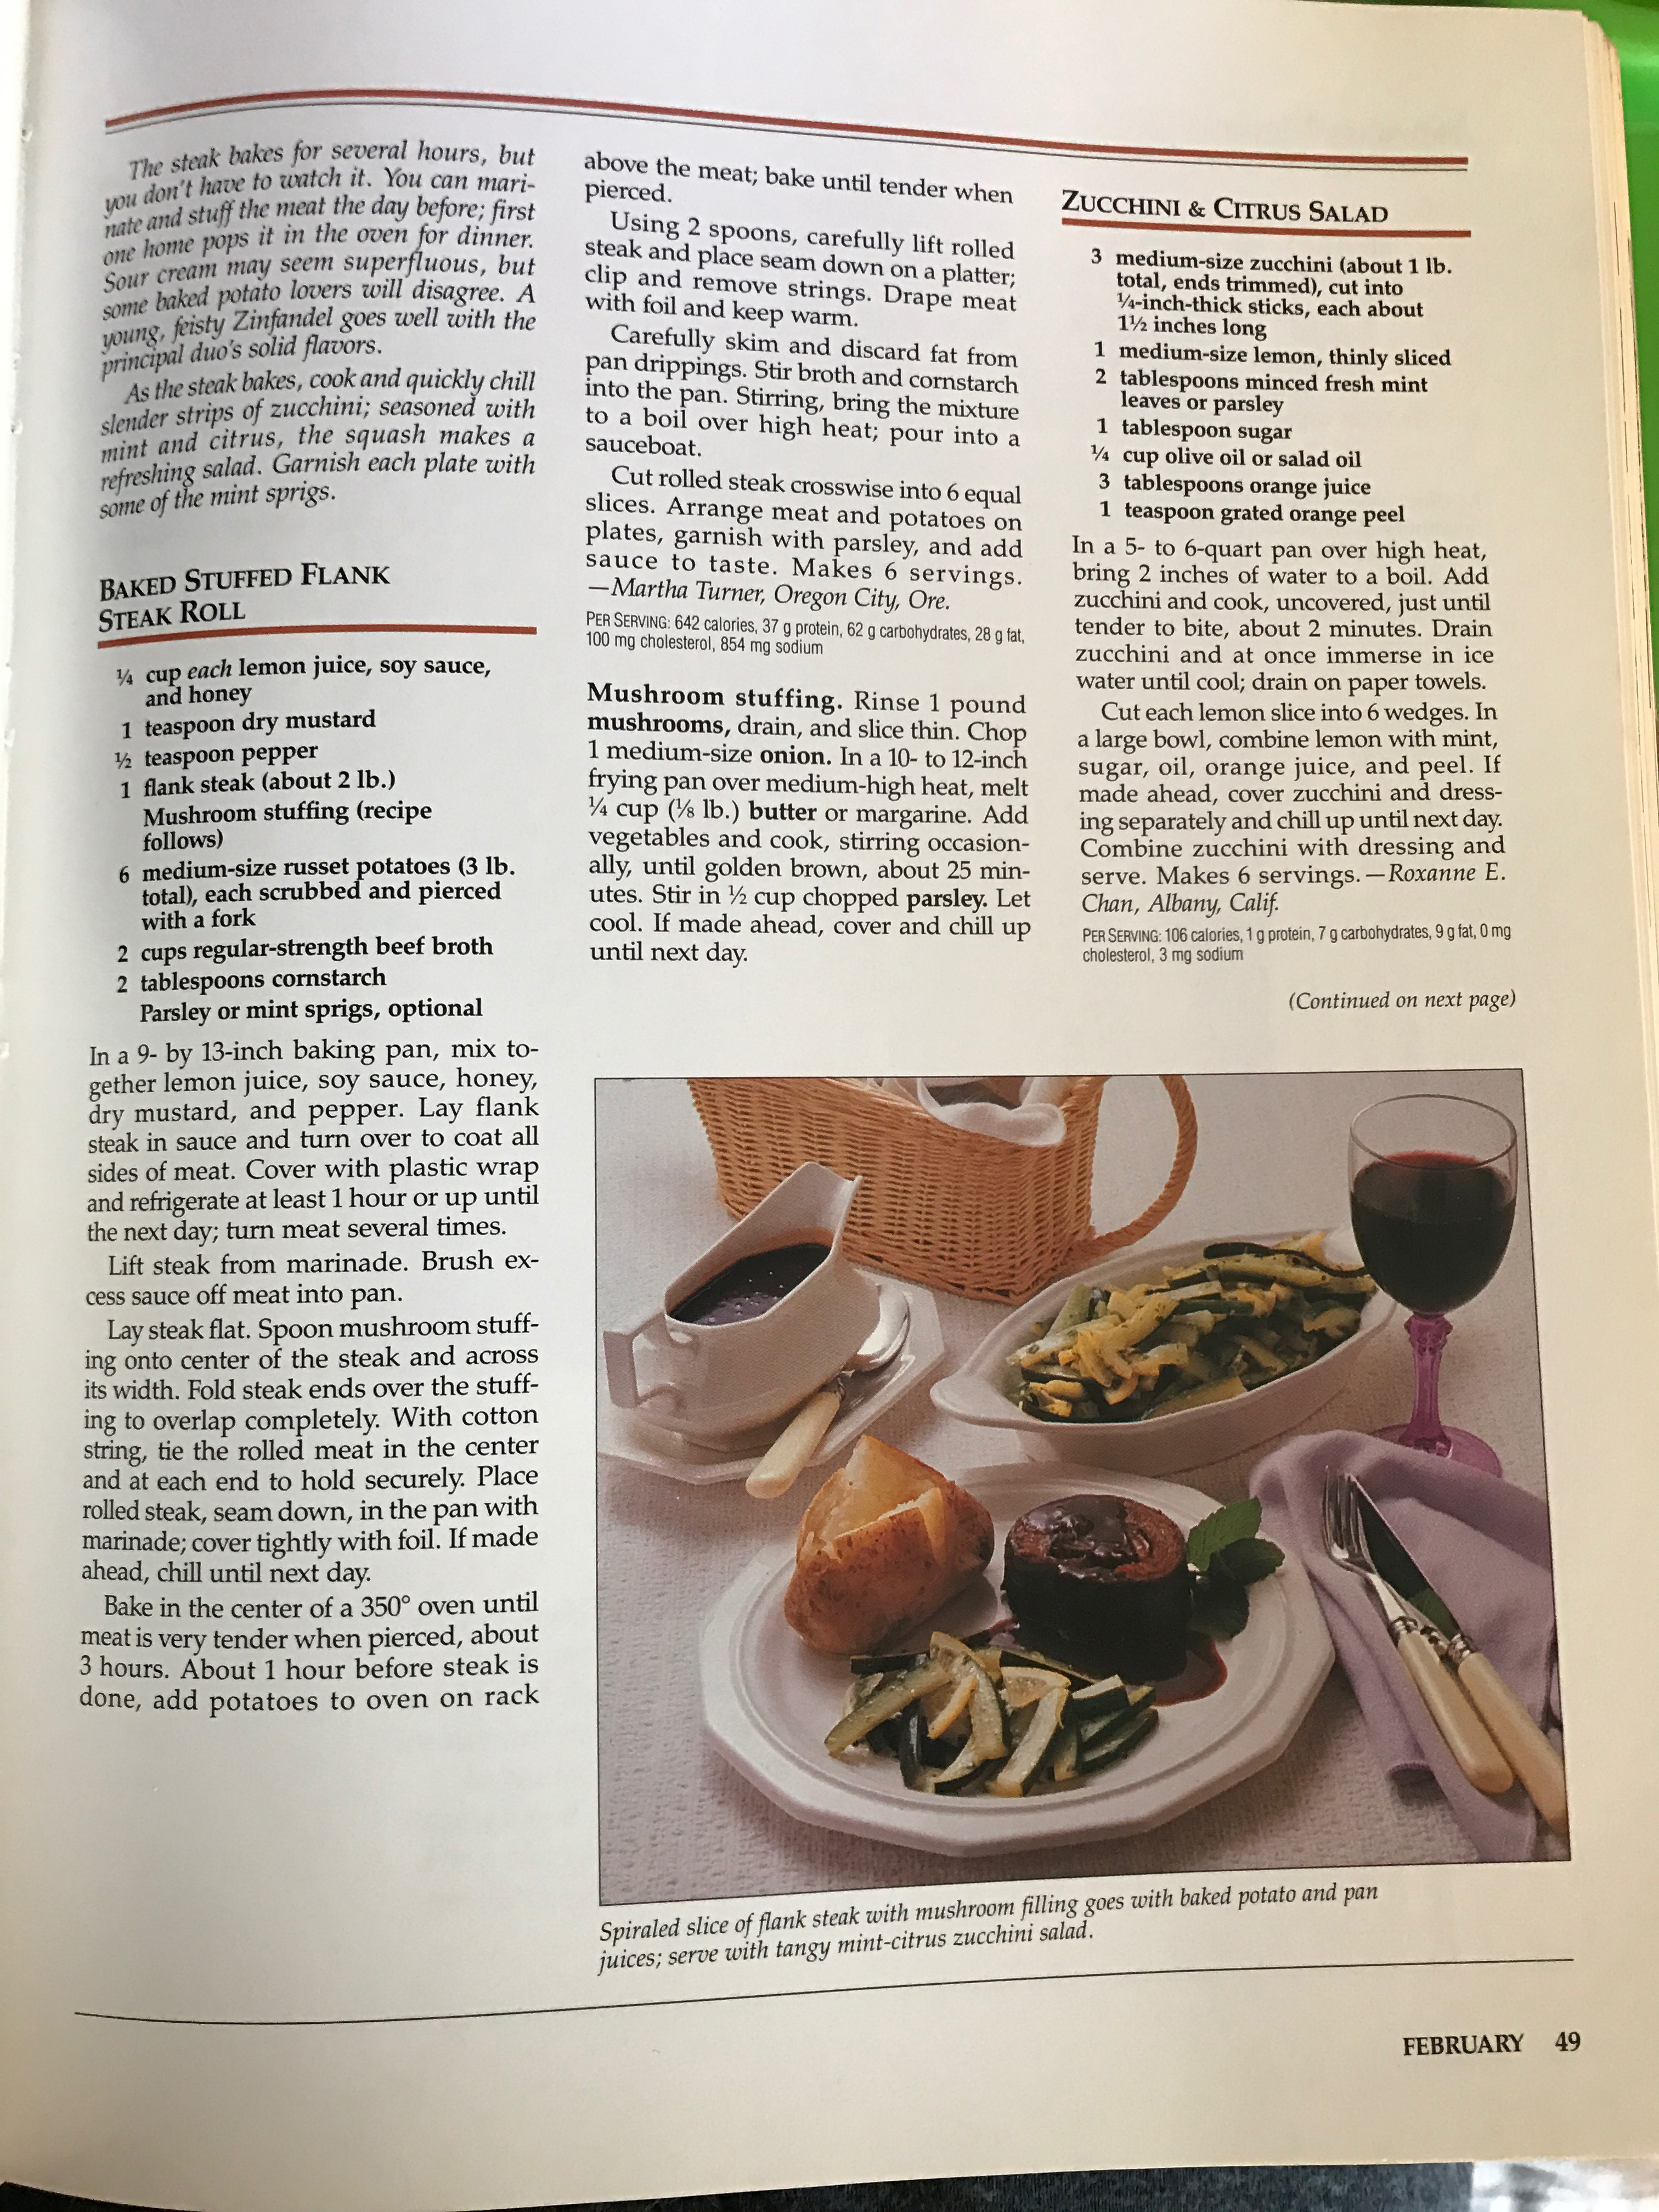 sunset recipe 1989 annual edition recipes magazine